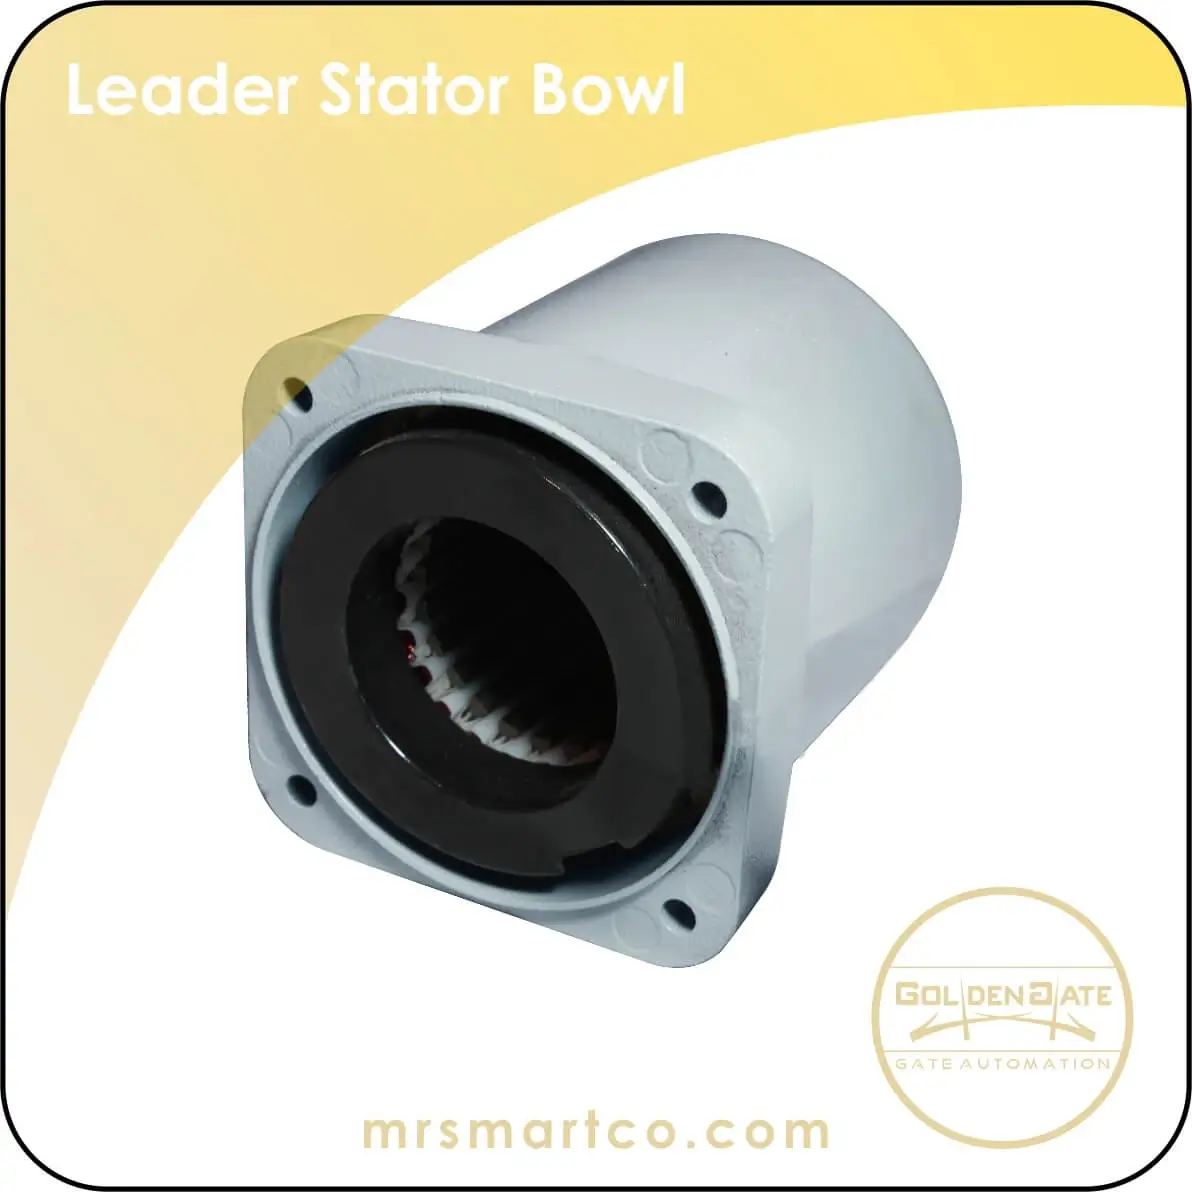 Leader stator bowl